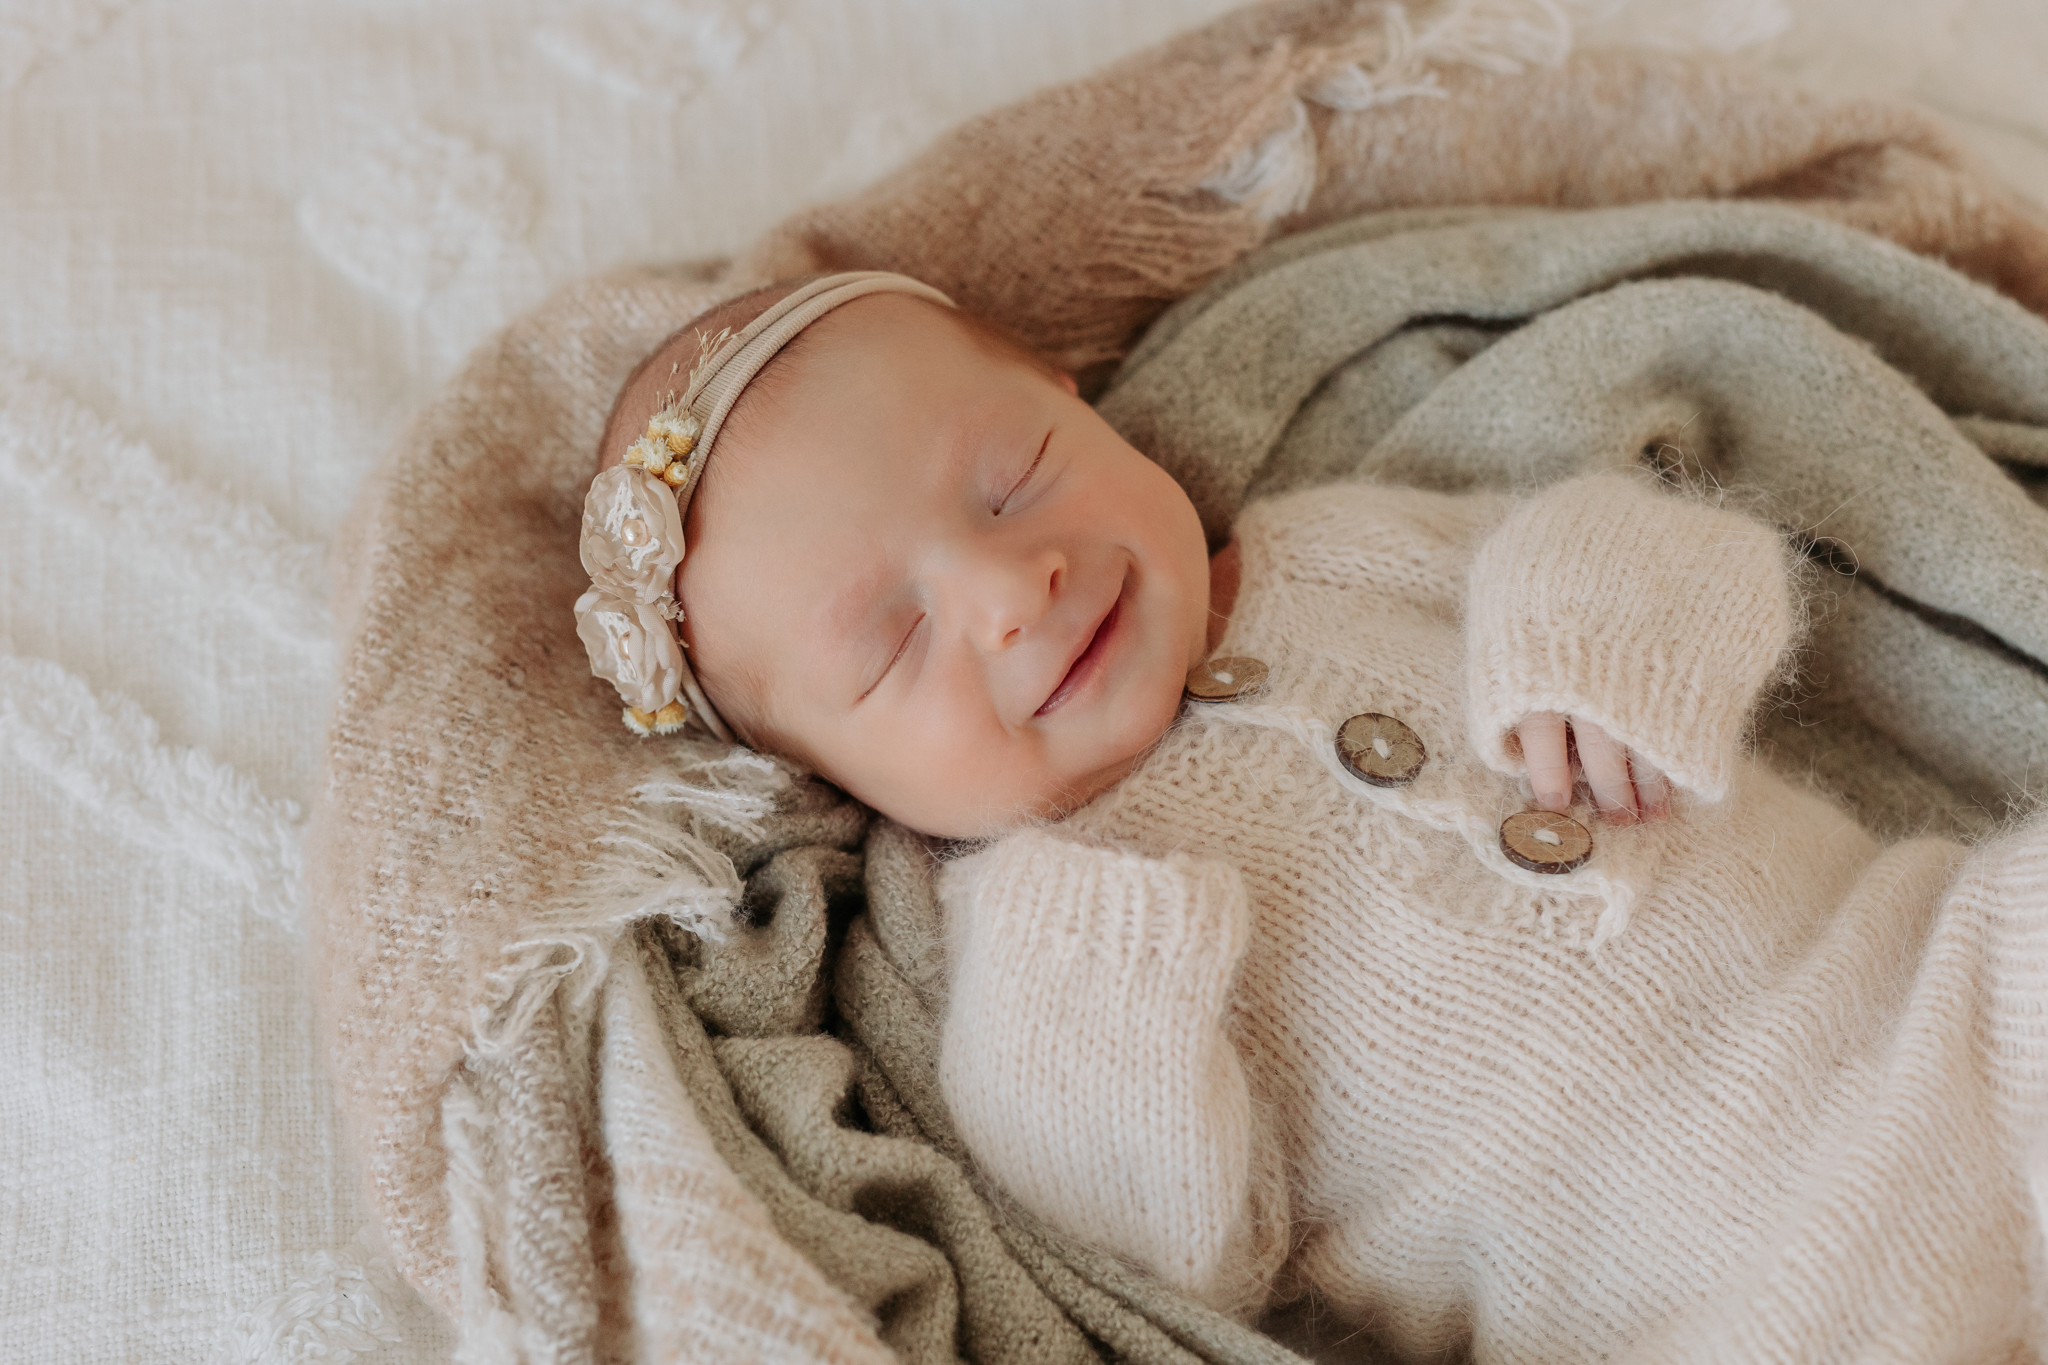 Natural newborn setup with baby in cream pajamas